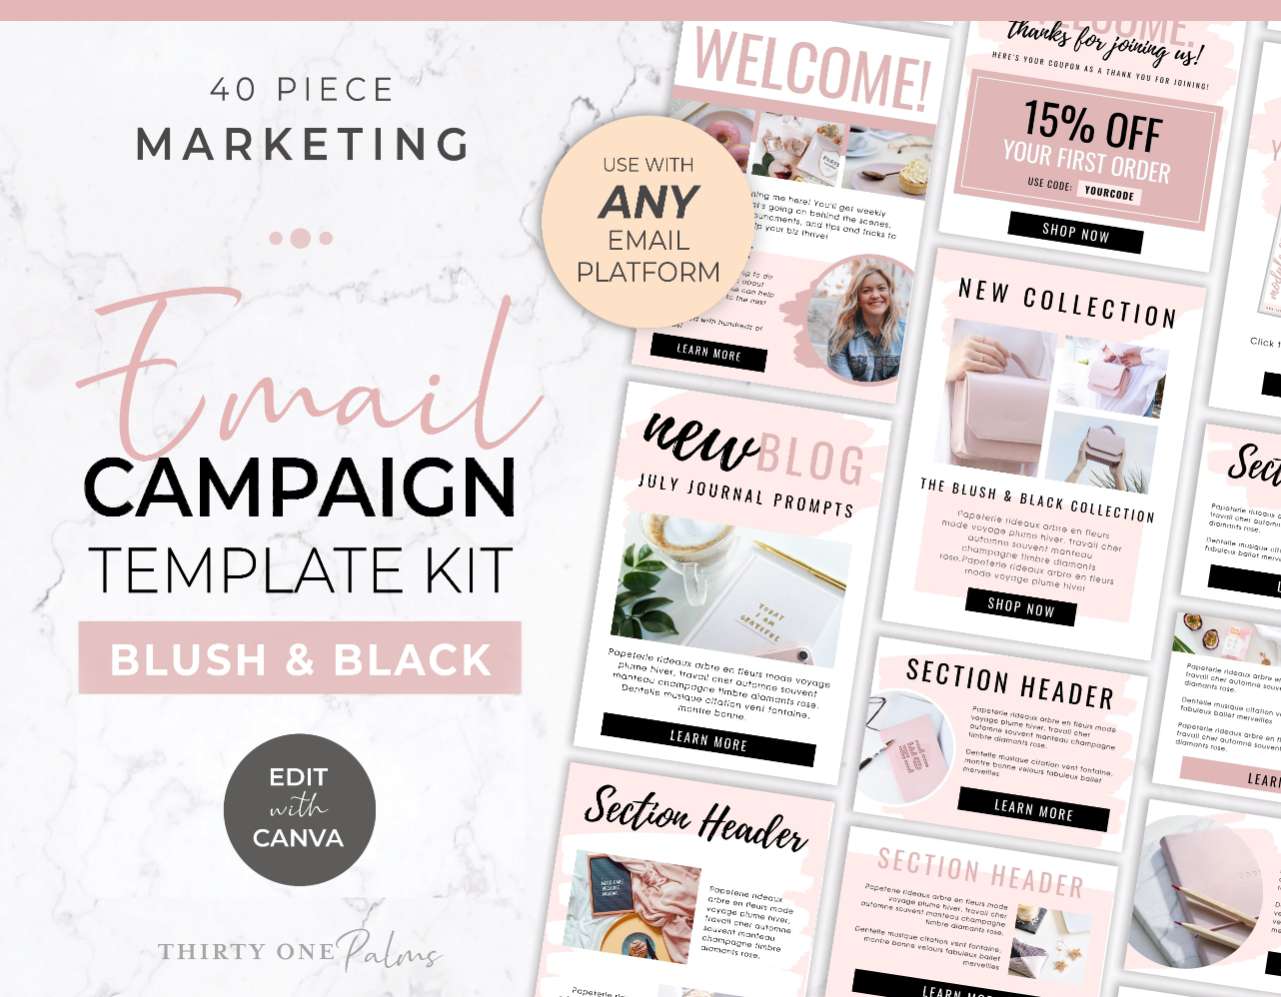 Email Marketing Campaign Template Kit – Blush & Black